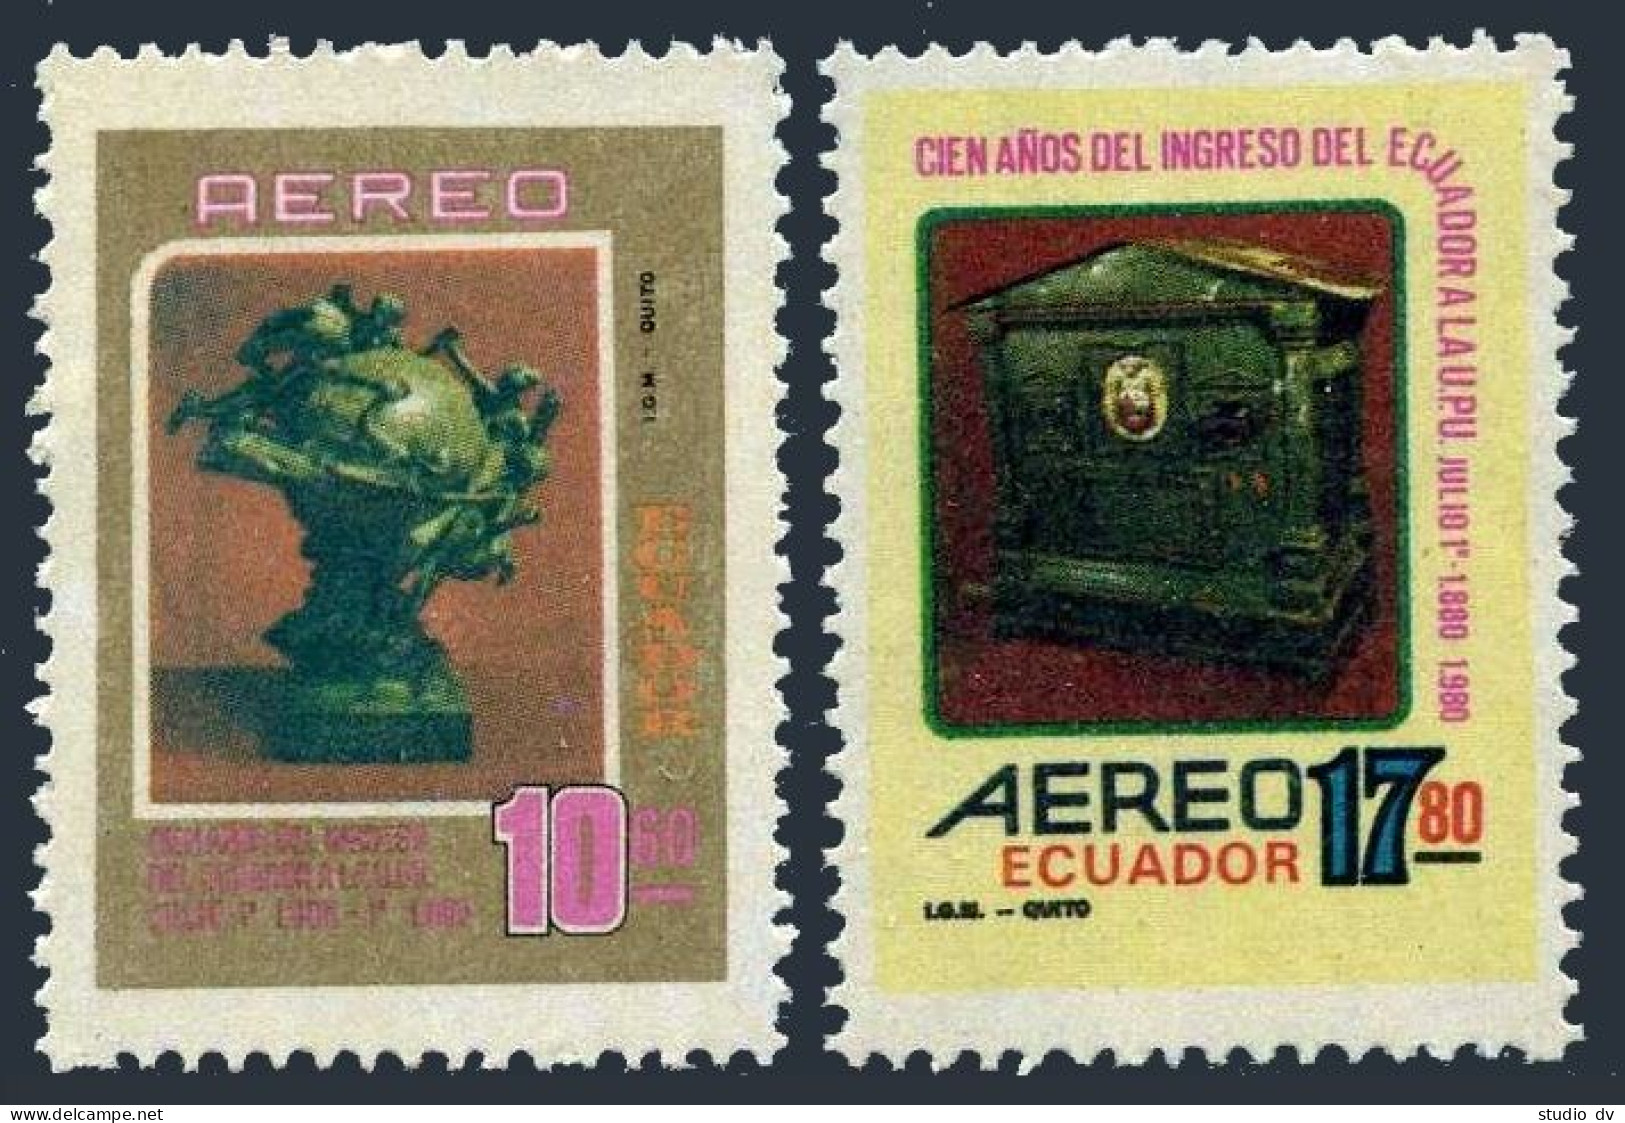 Ecuador C692-C694, MNH. Mi 1861-1862, Bl.94. UPU Membership, 100,1980. Monument. - Ecuador